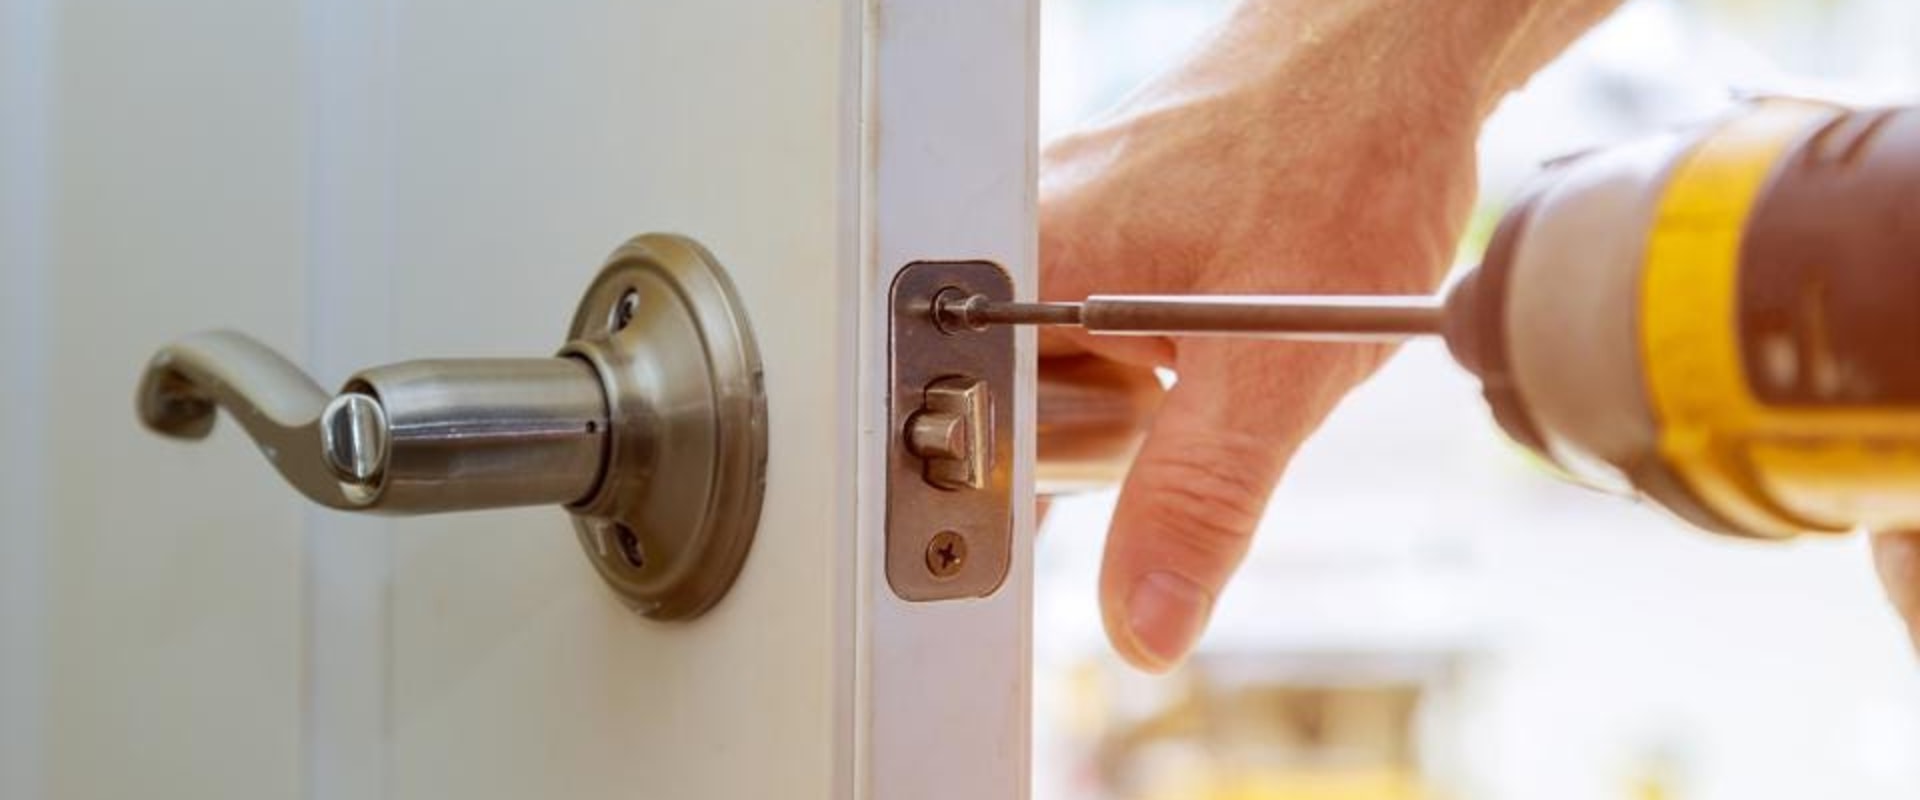 Do Residential Locksmiths Offer Safe Repair Services?